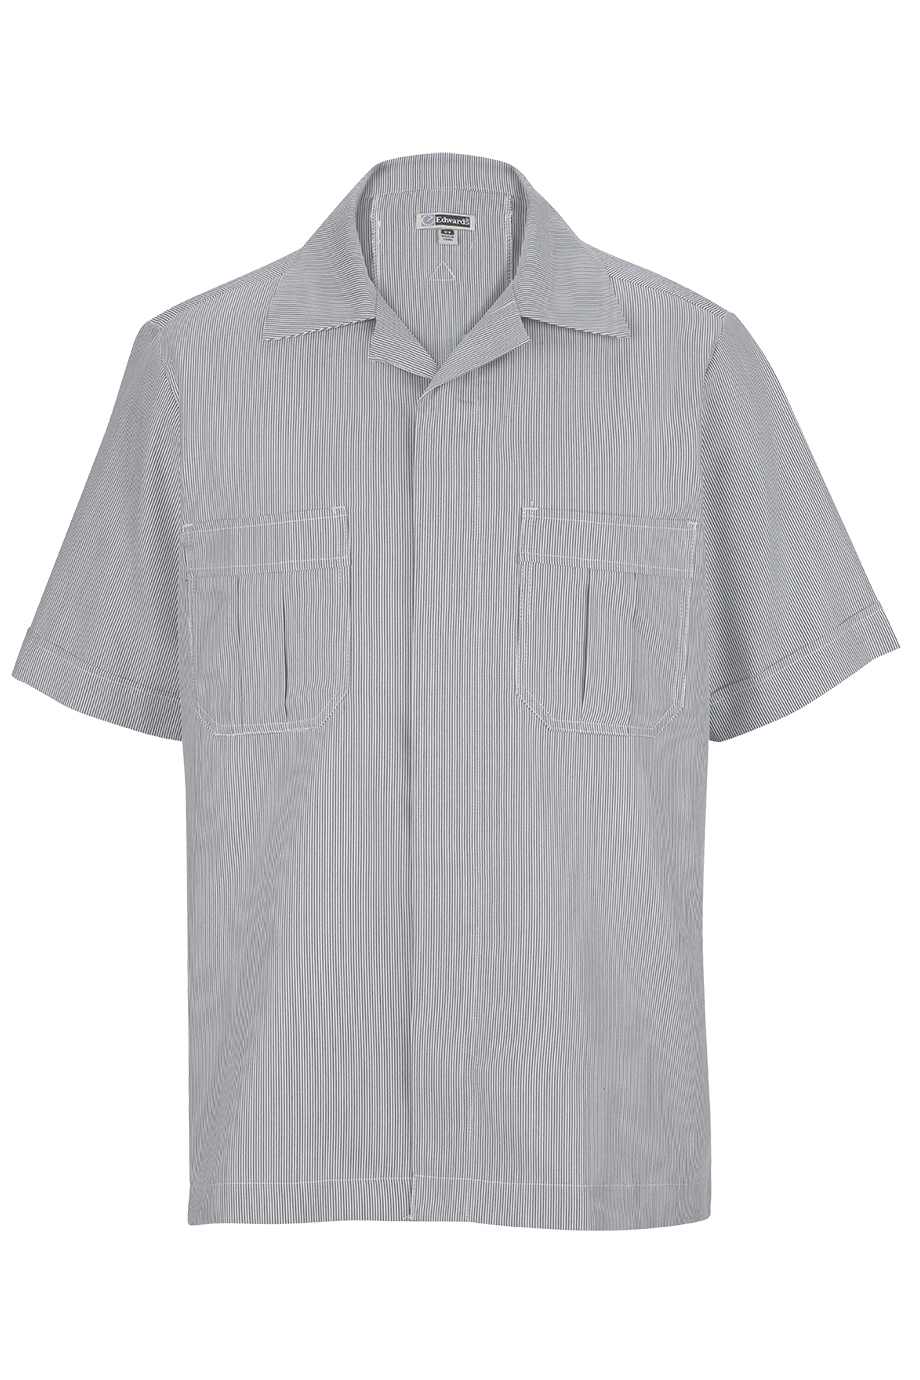 Men's Junior Cord Service Shirt 4275